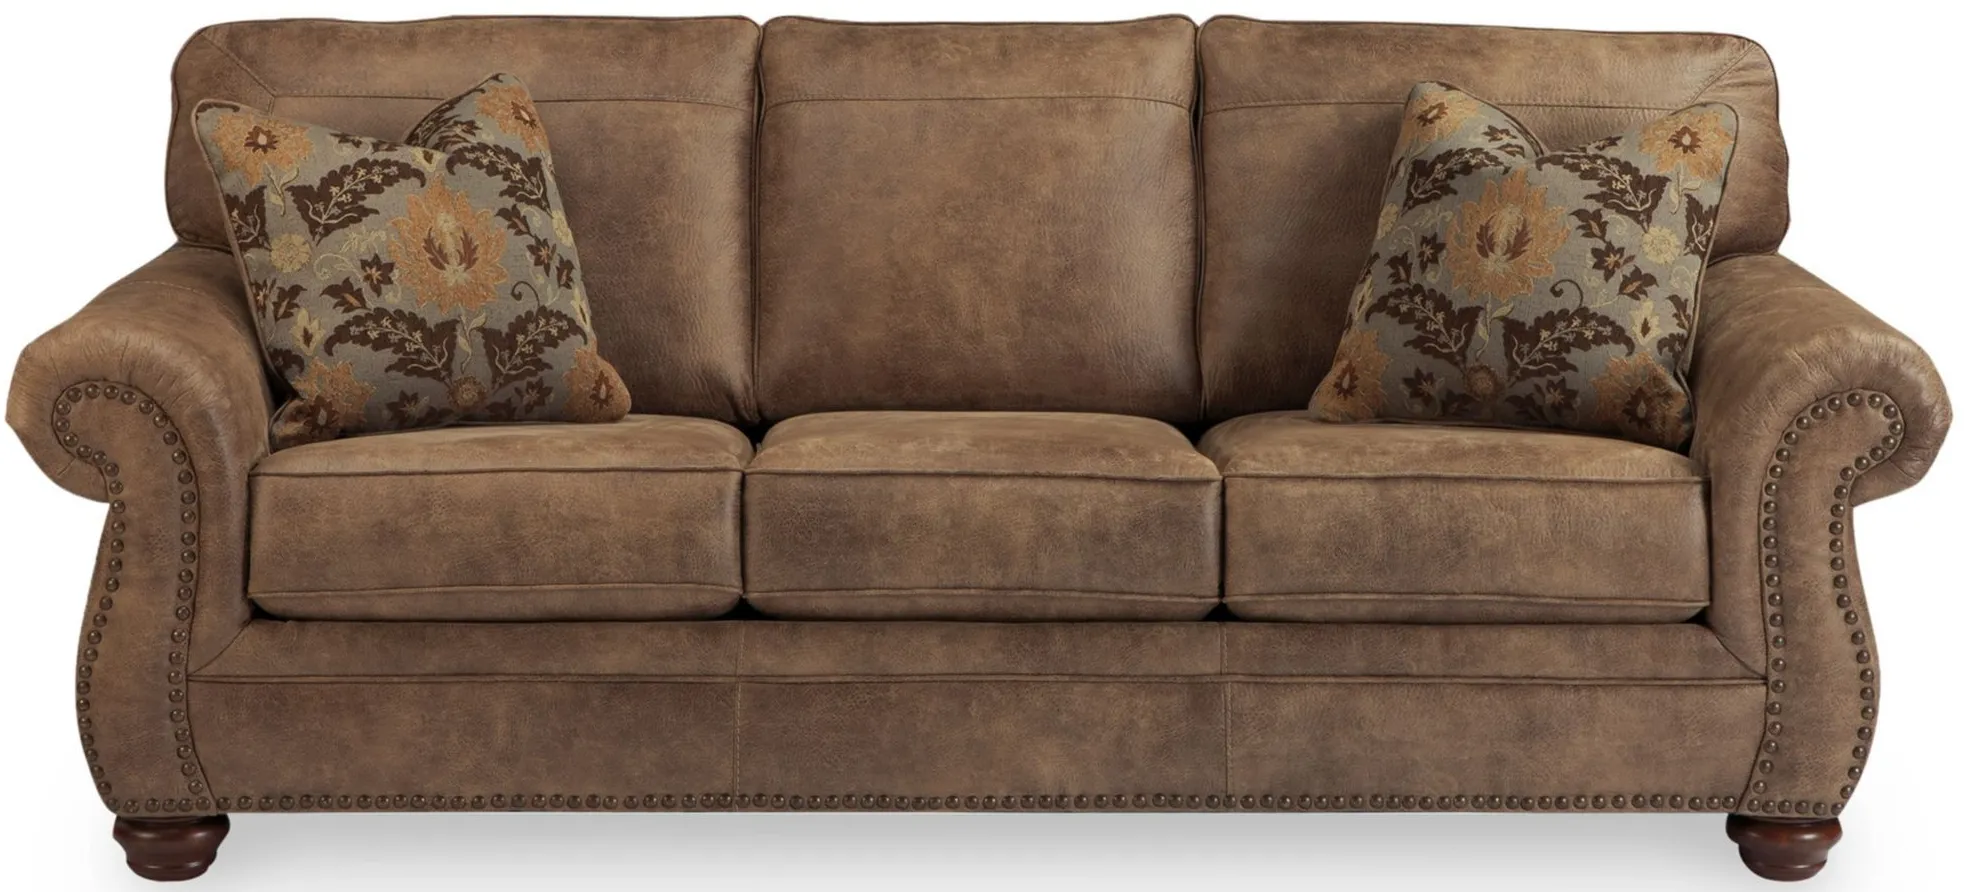 Larkinhurst Sofa in Earth by Ashley Furniture